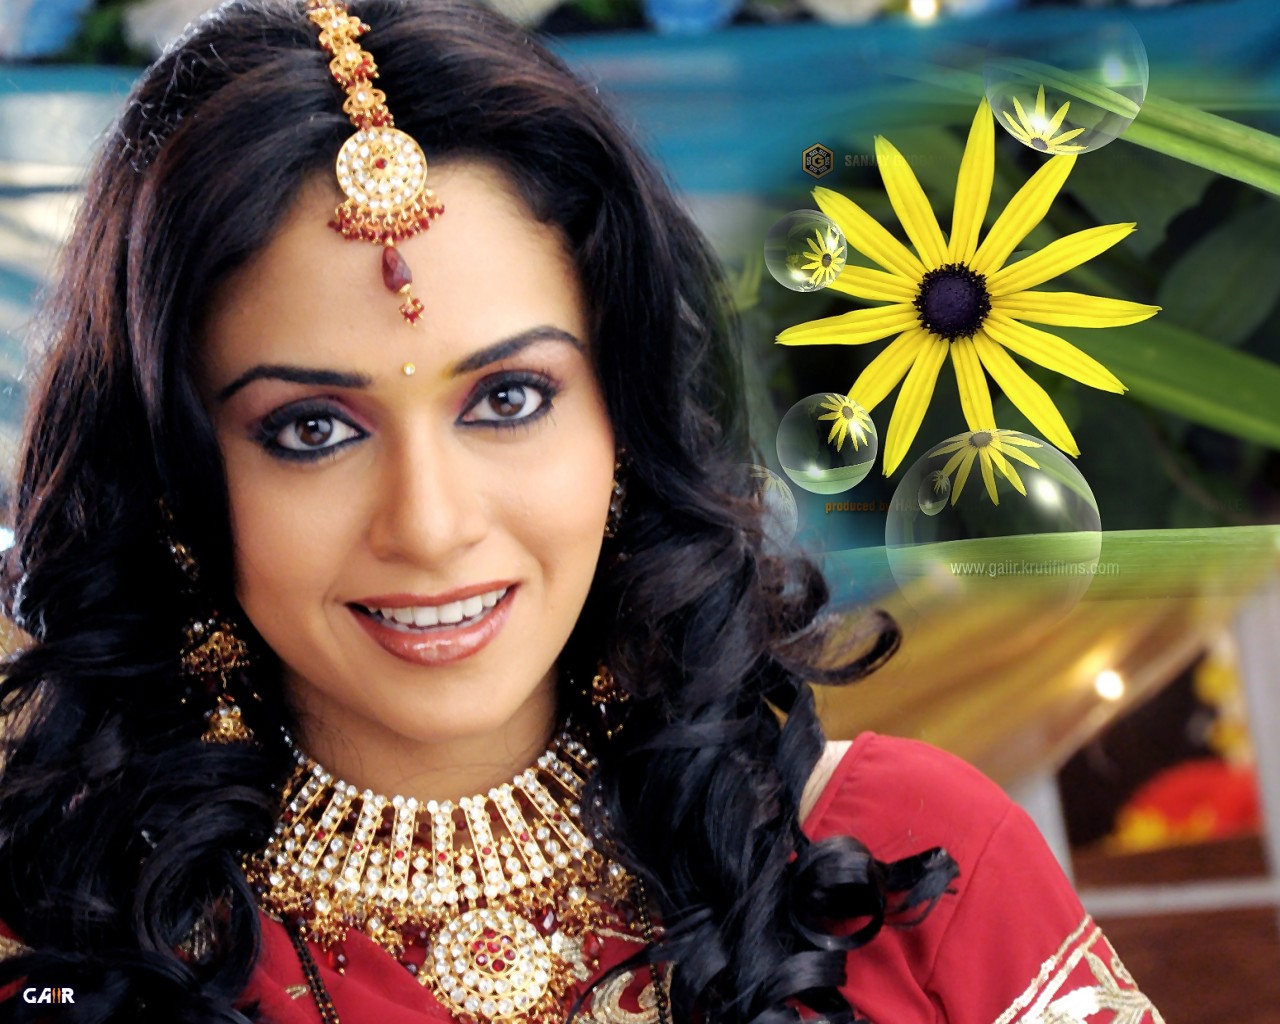 http://2.bp.blogspot.com/_jynCnIdwsk4/S8hK9S6yh_I/AAAAAAAABmE/j34-Hk1GS3Y/s1600/Marathi-actress-wallpapers-002-amruta-khanvilkar.jpg